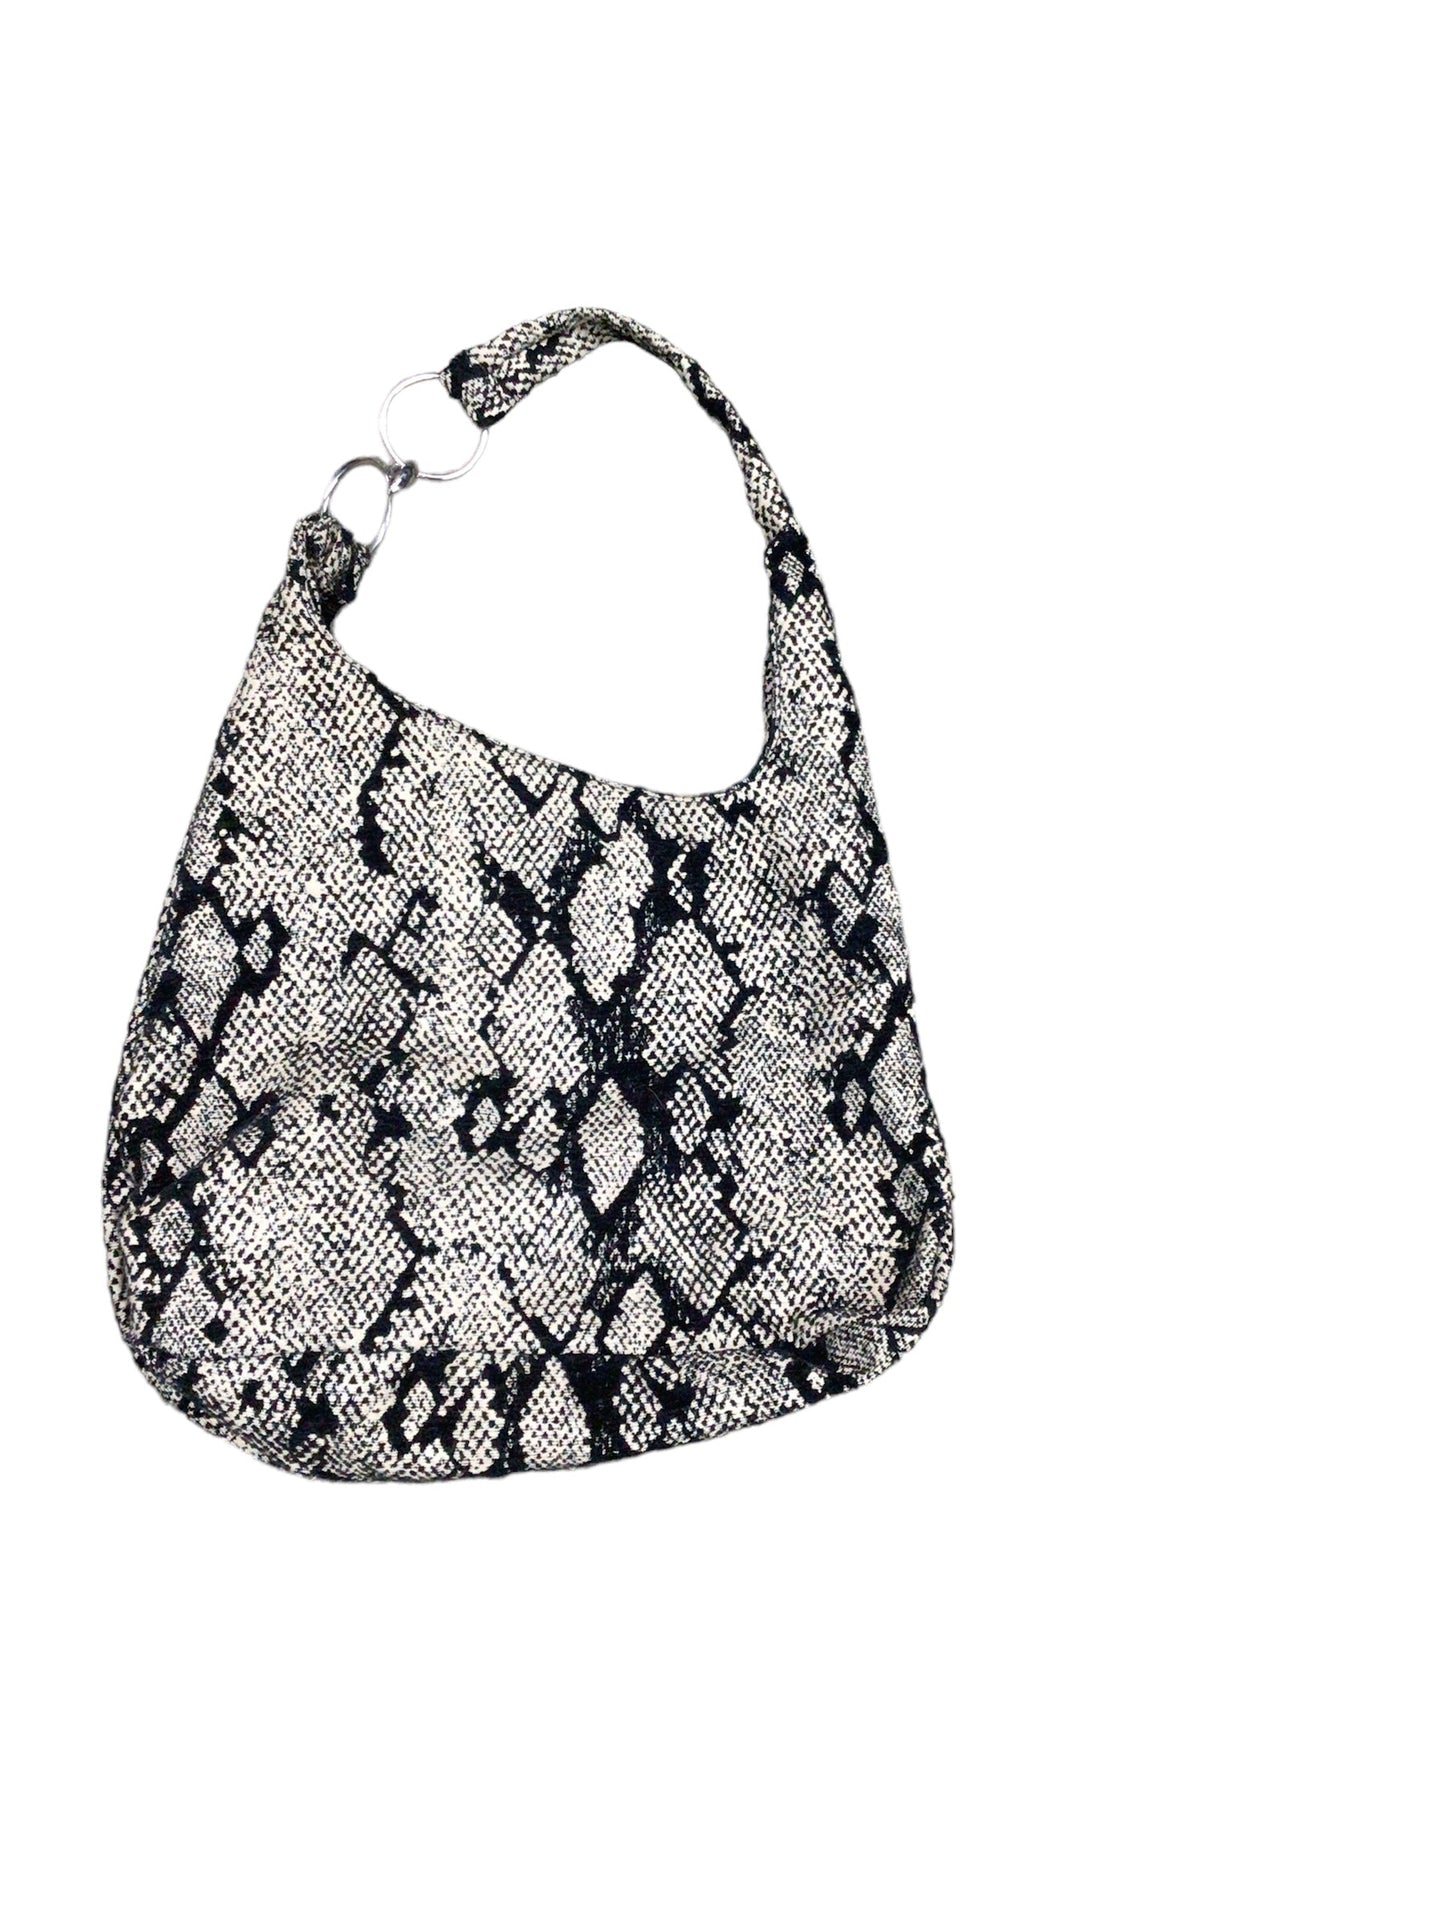 Handbag By Topshop  Size: Medium